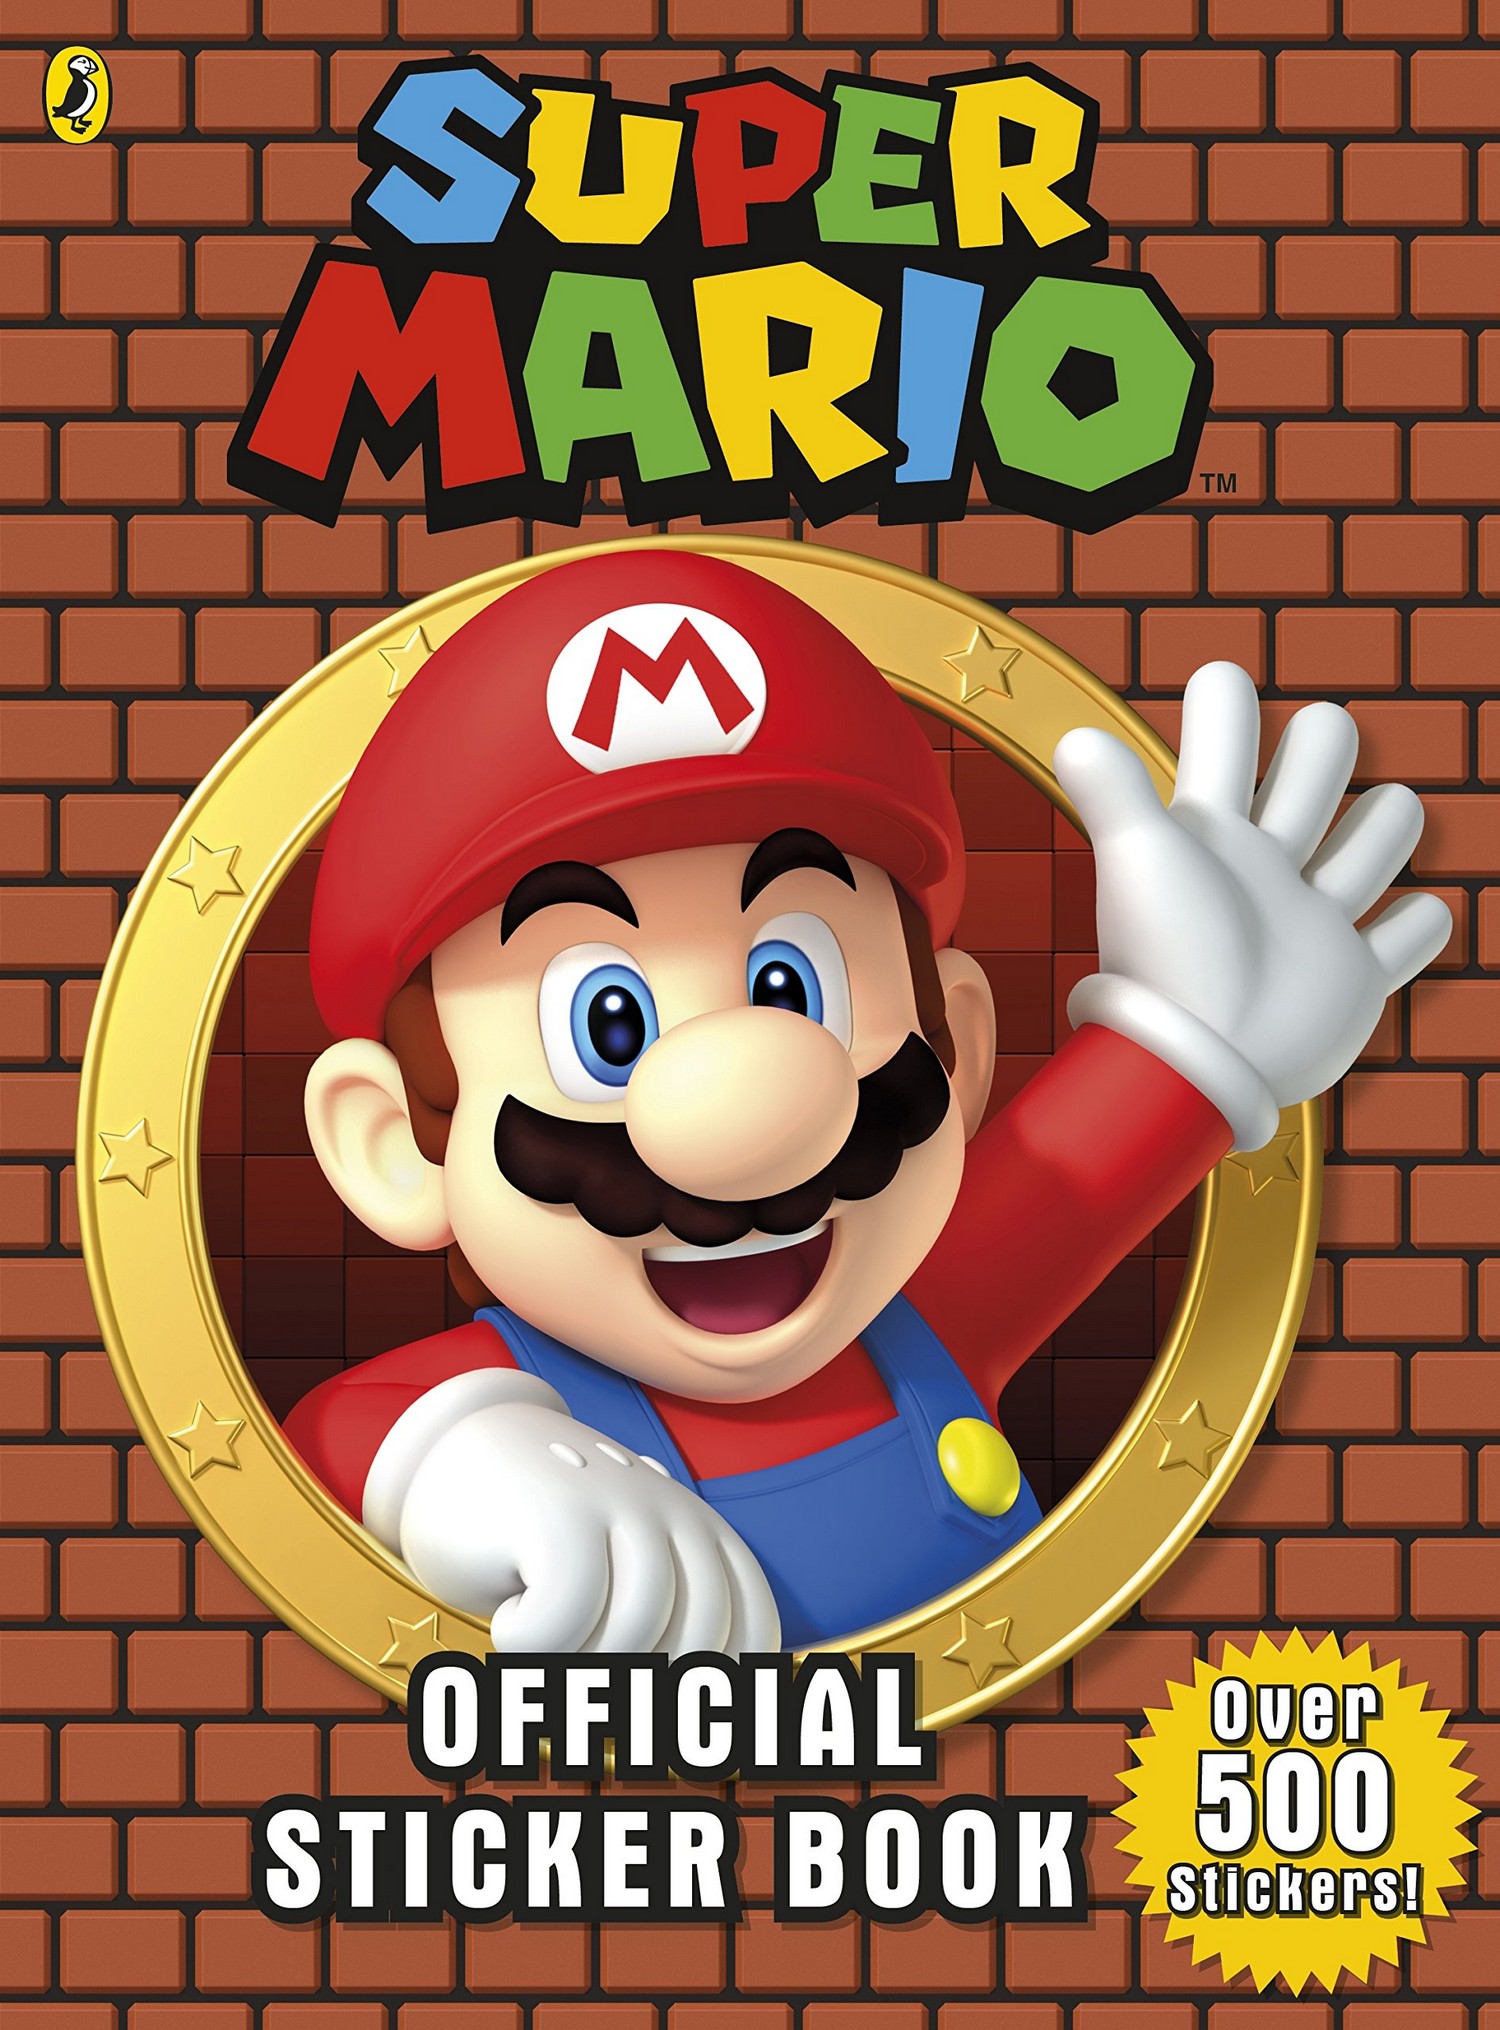 Super Mario - Official Sticker Book incl. 500+ Stickers